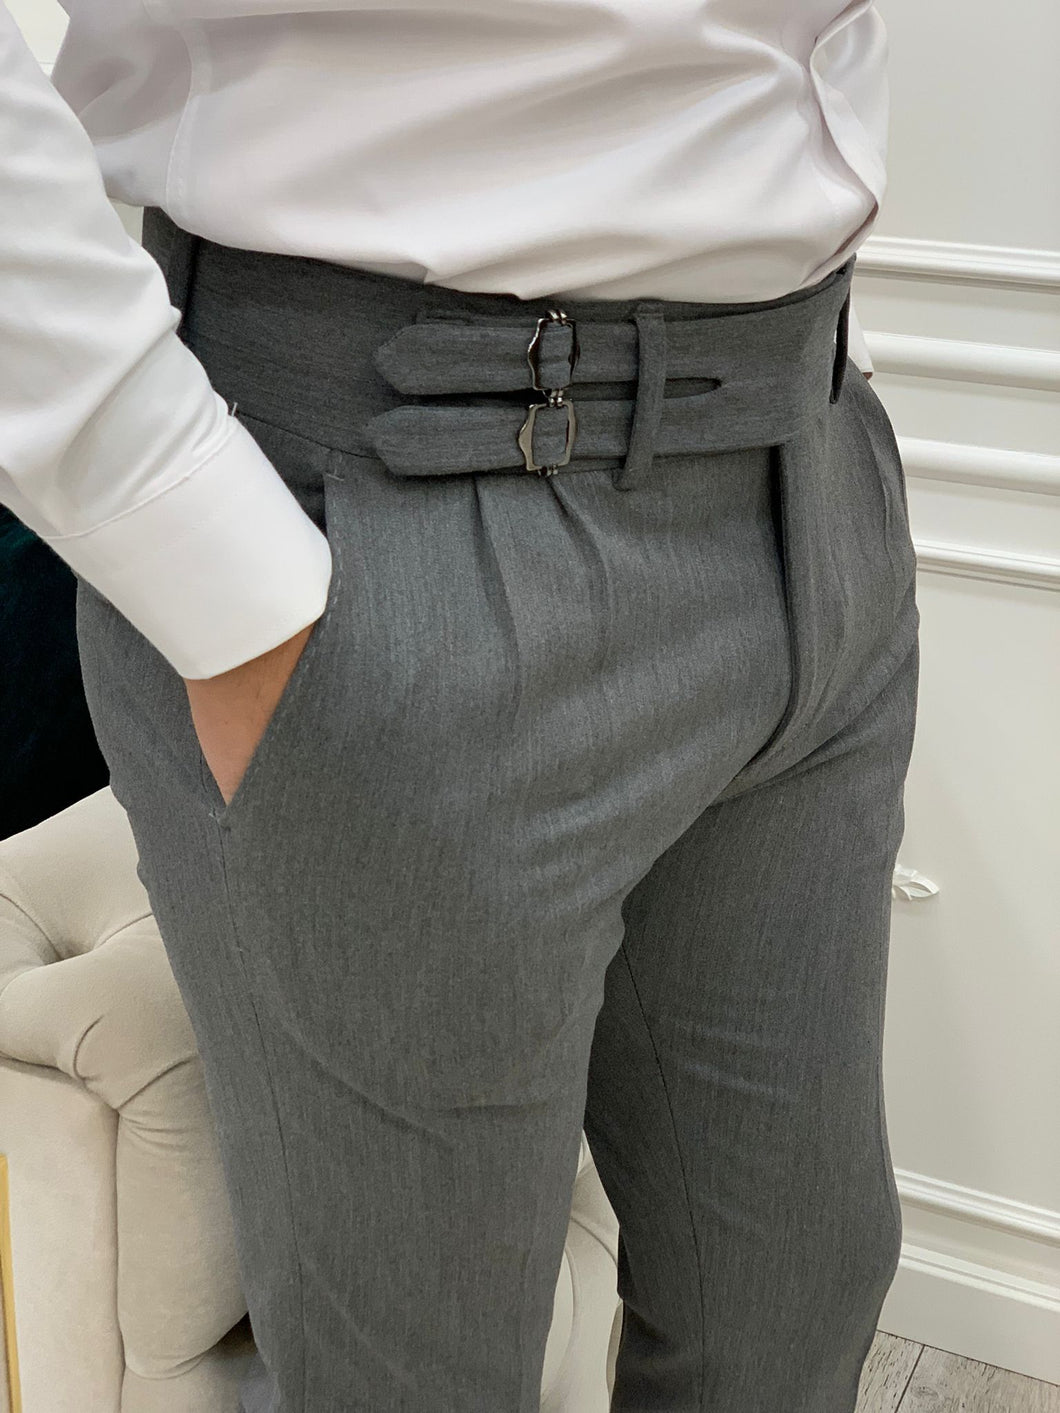 Harringate Slim Fit Double Buckled Gray Pants